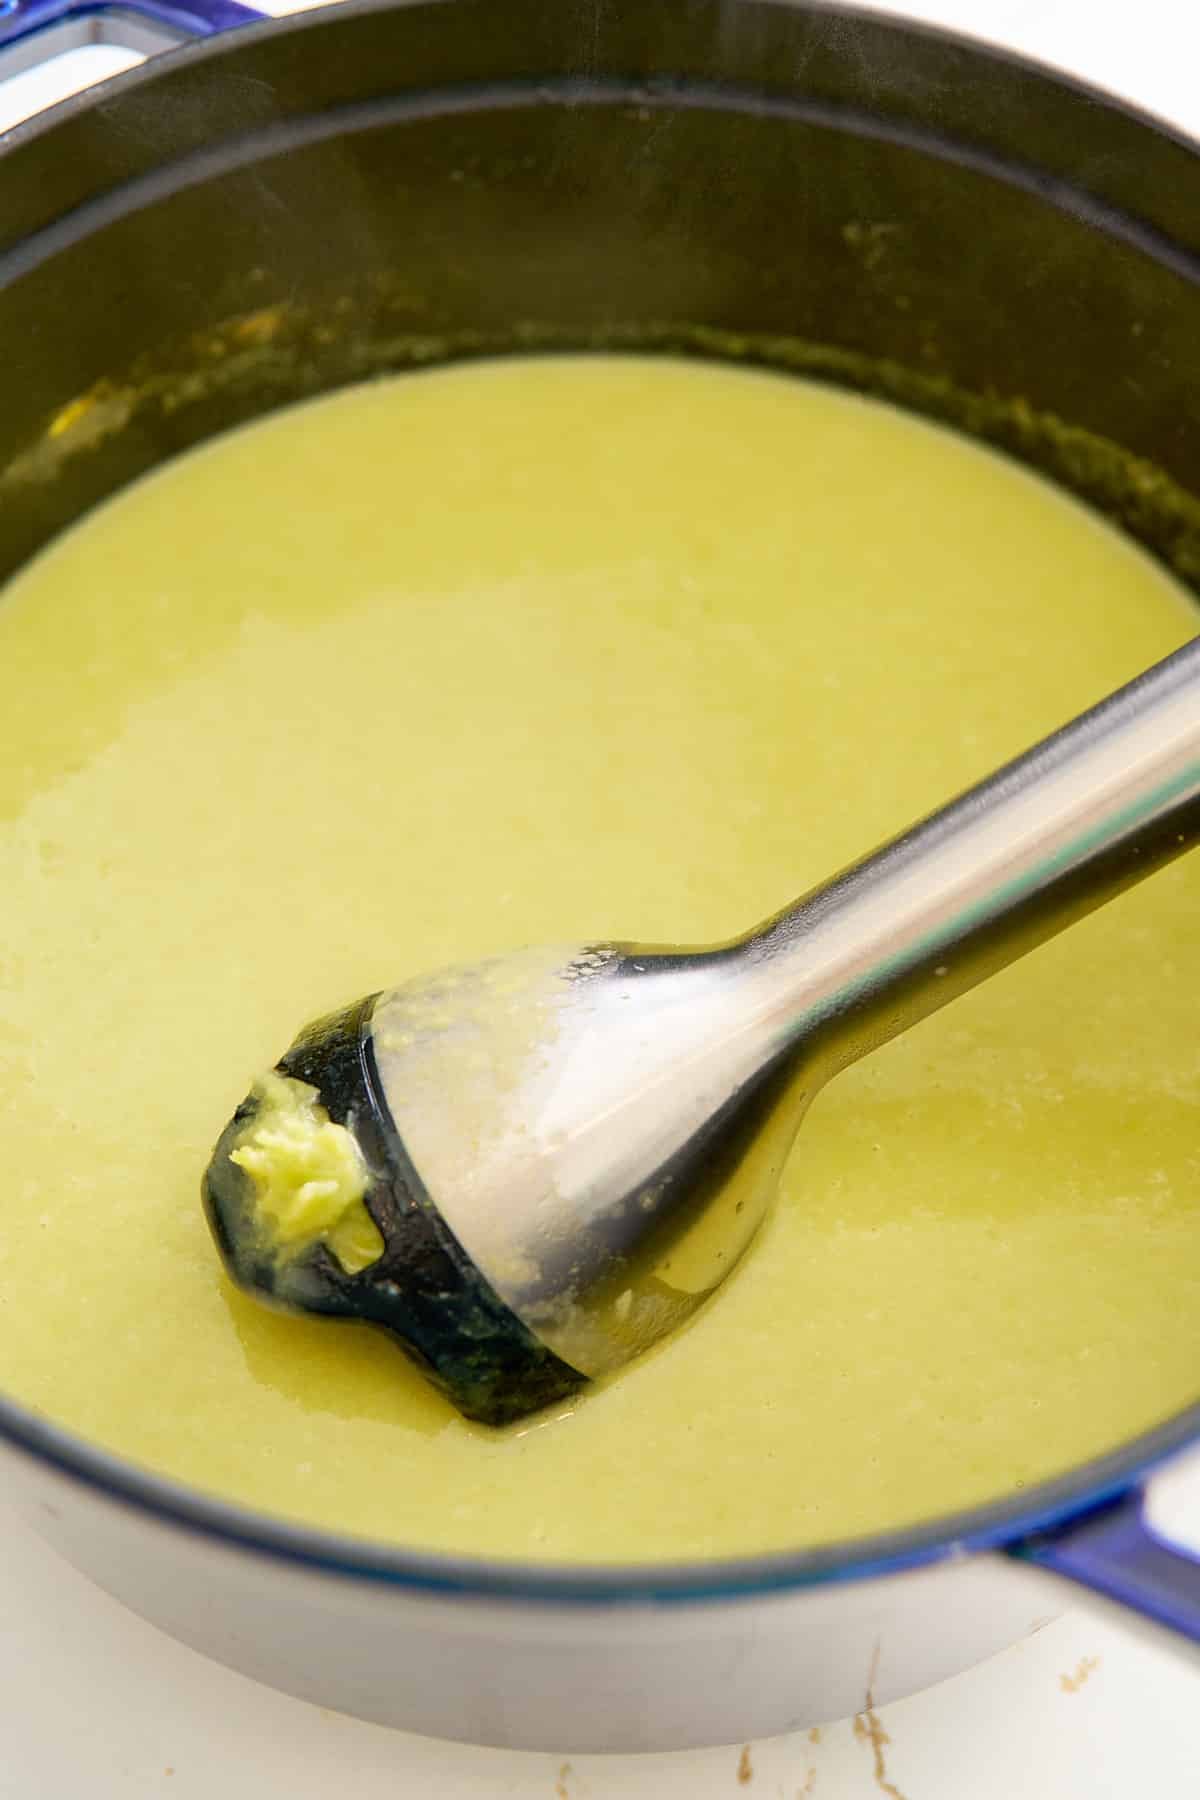 blender blending the asparagus soup in the pot